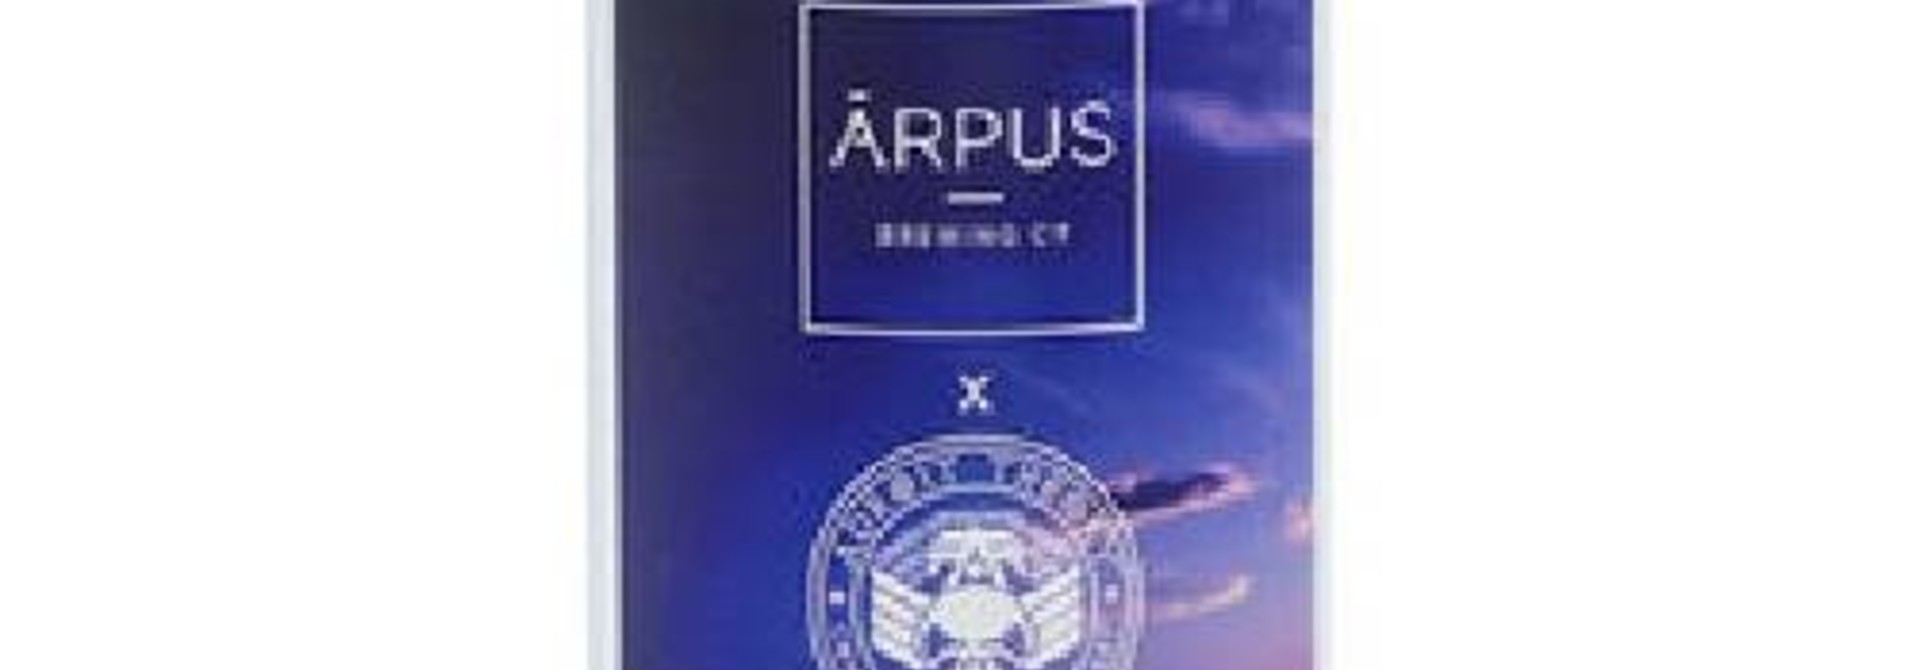 Arpus / Adroit Theory Into A New Dawn Qdh West Coast IPA 12%